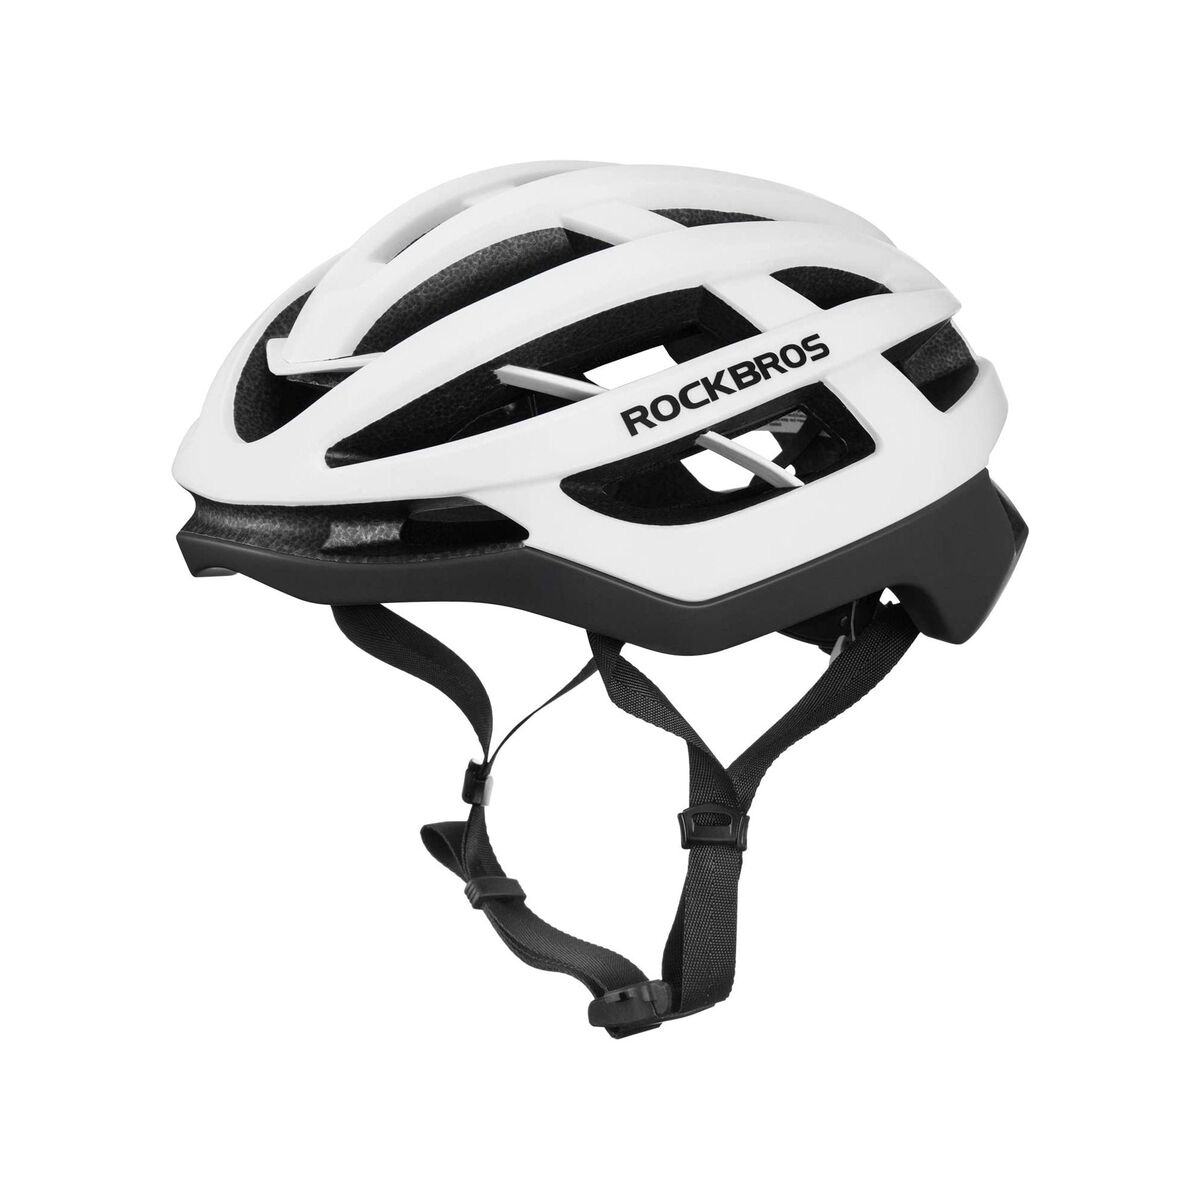 ROCKBROS Cycling Helmet Large HC58WG White